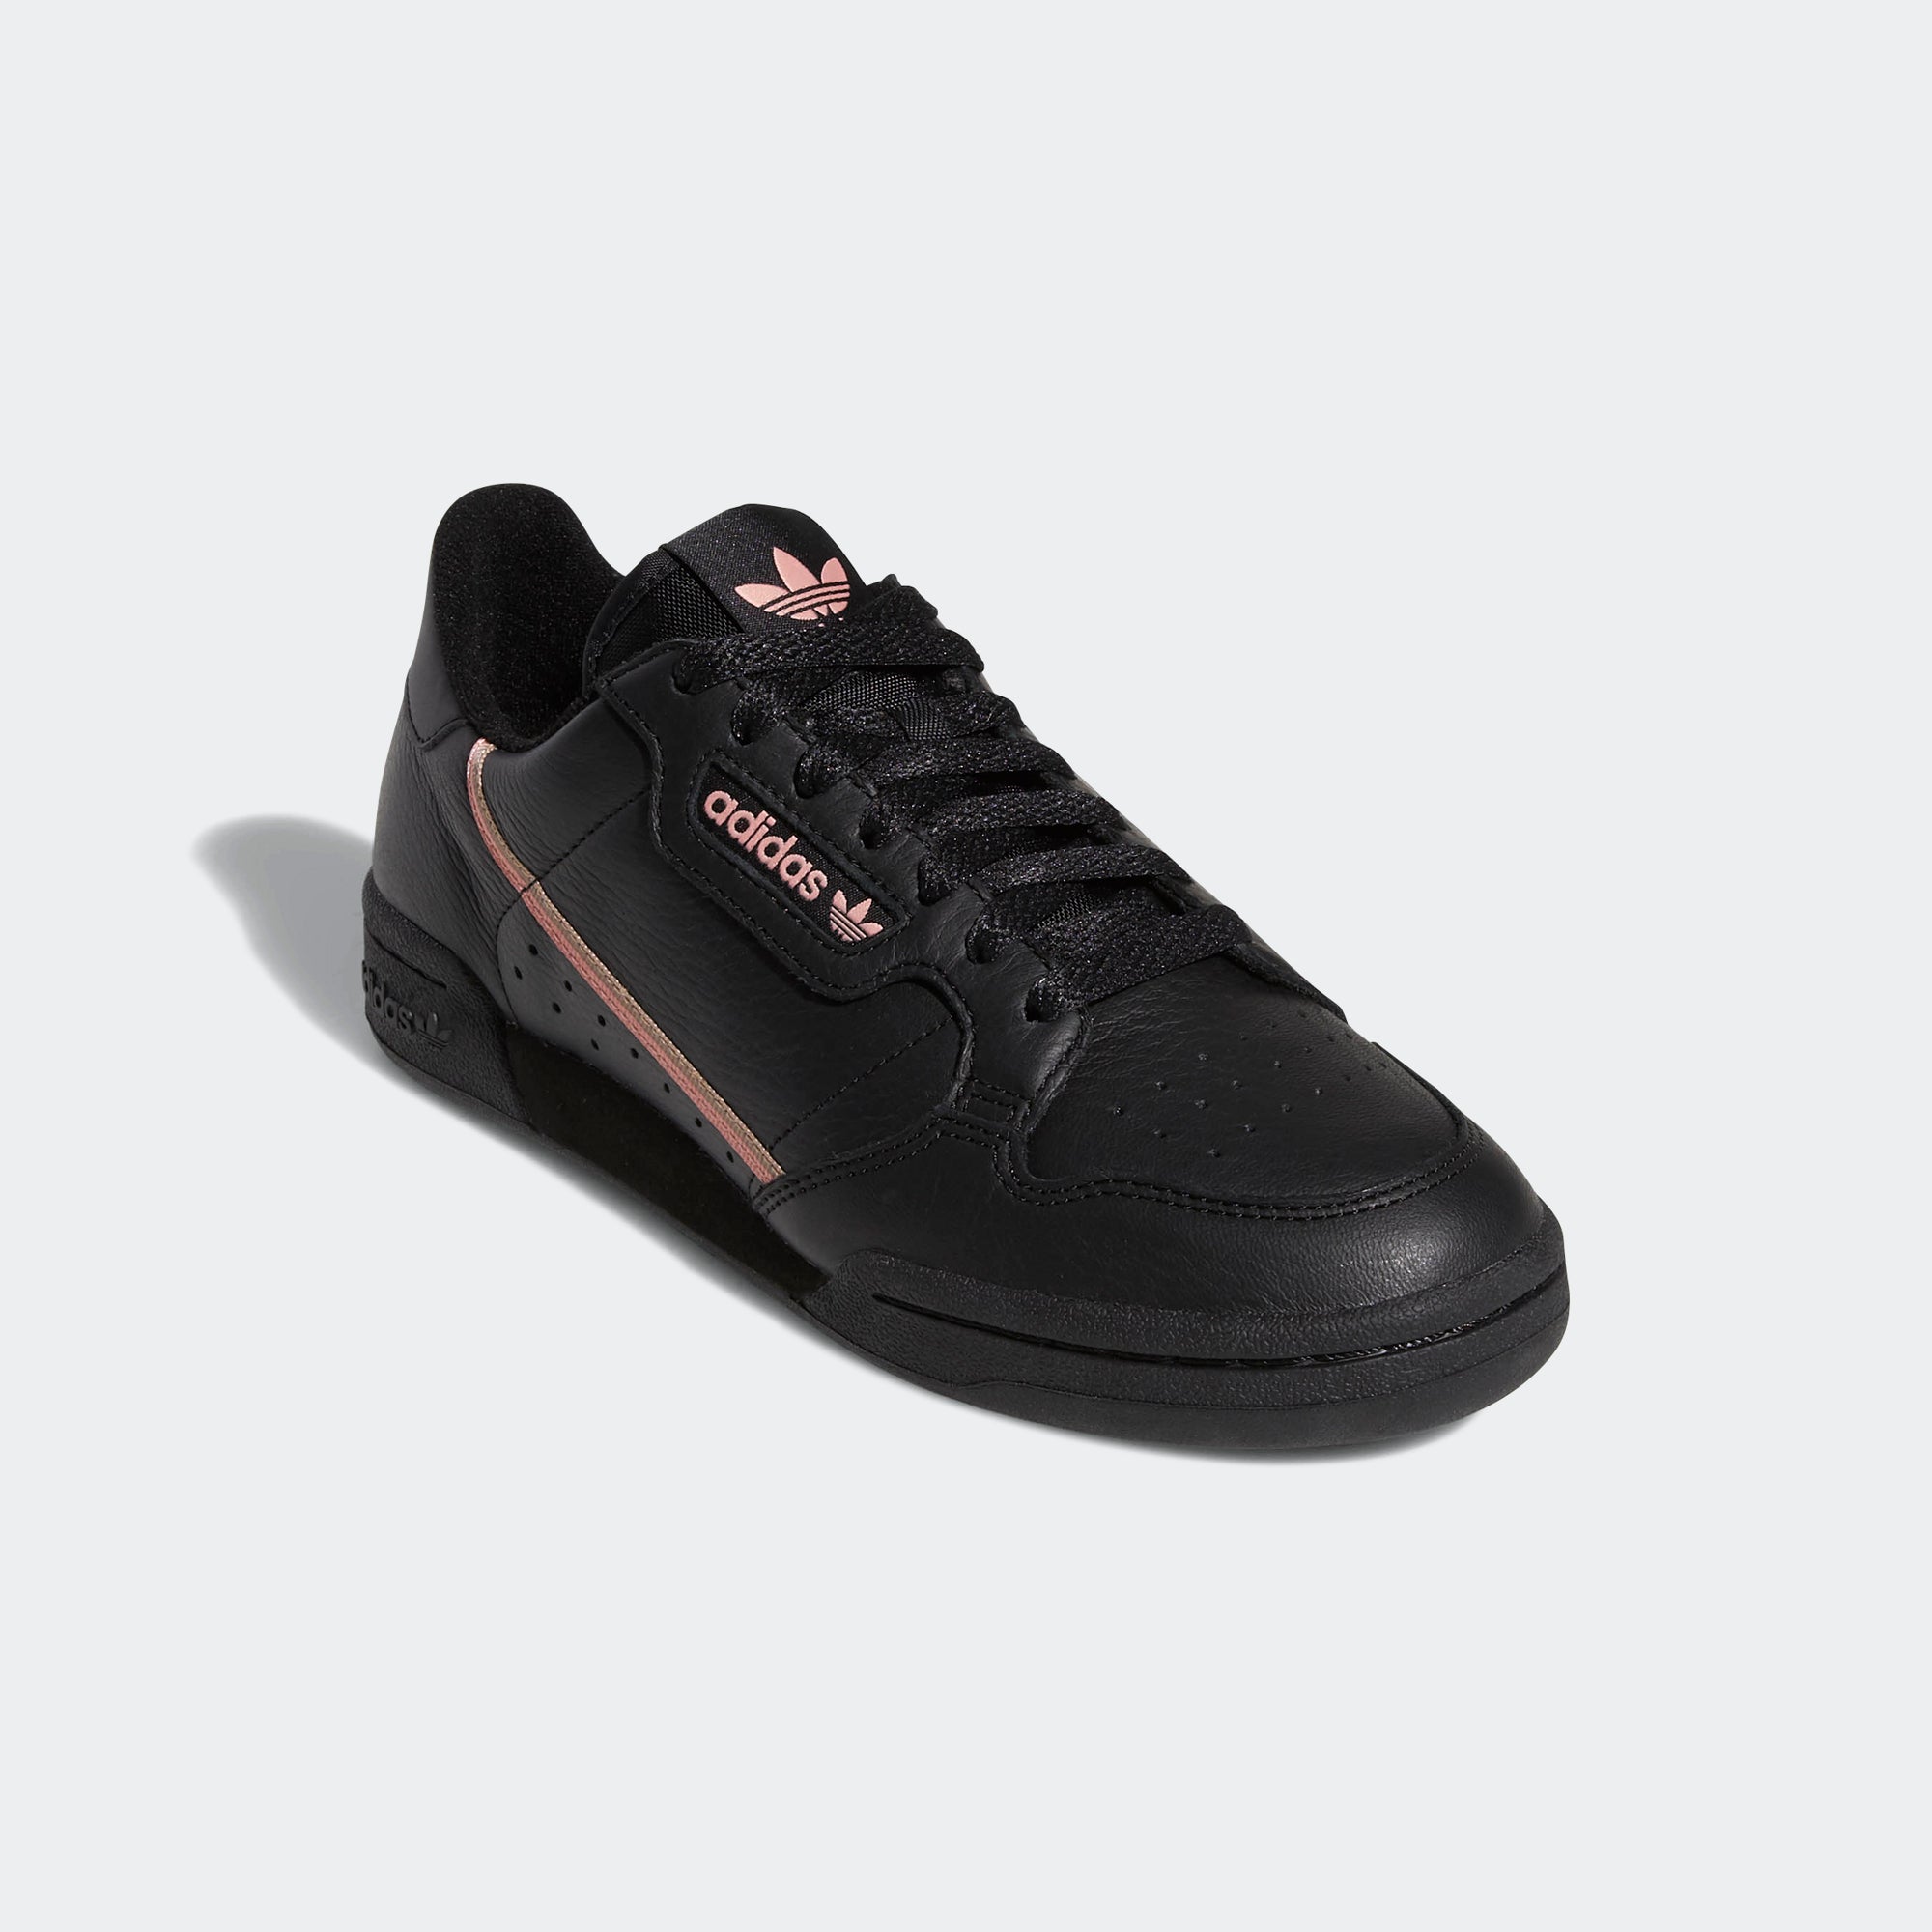 adidas continental 80 black pink